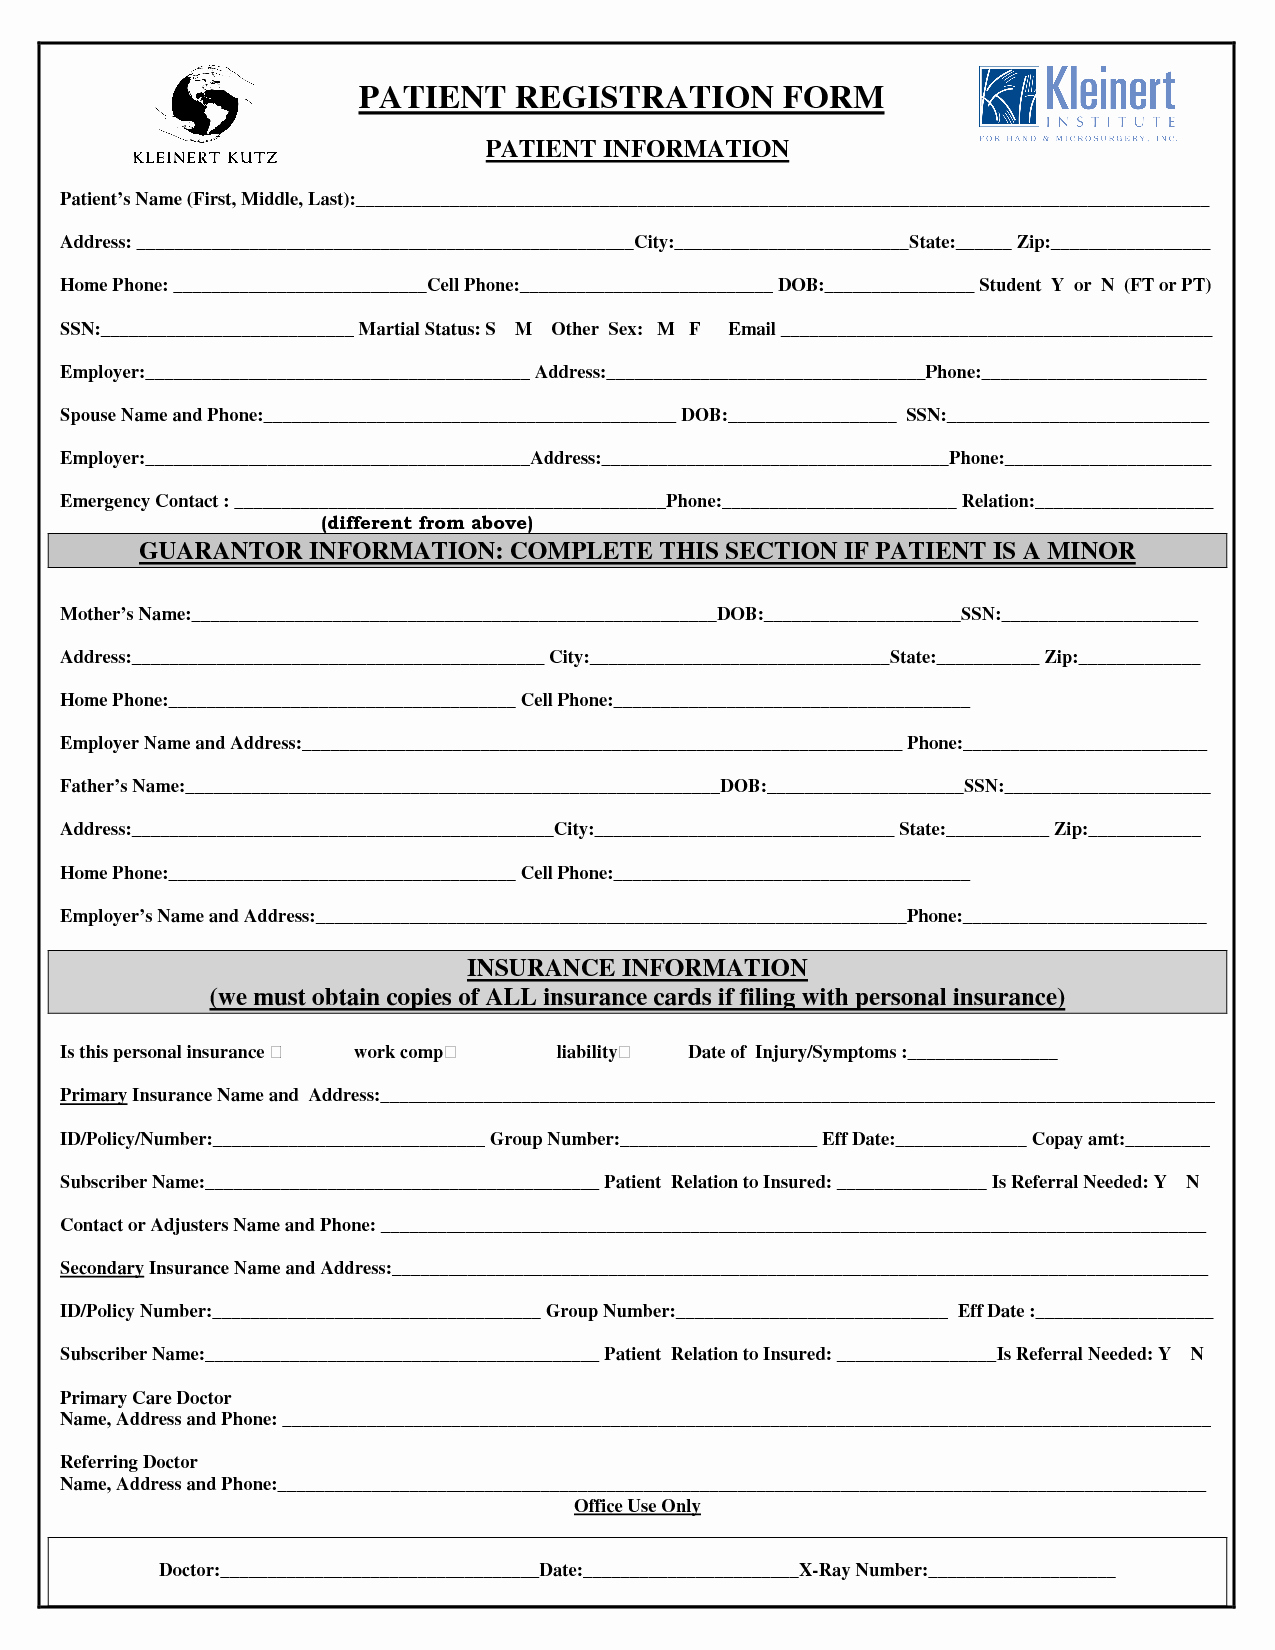 New Patient Registration form Template Fresh Best S Of Printable Patient Registration forms